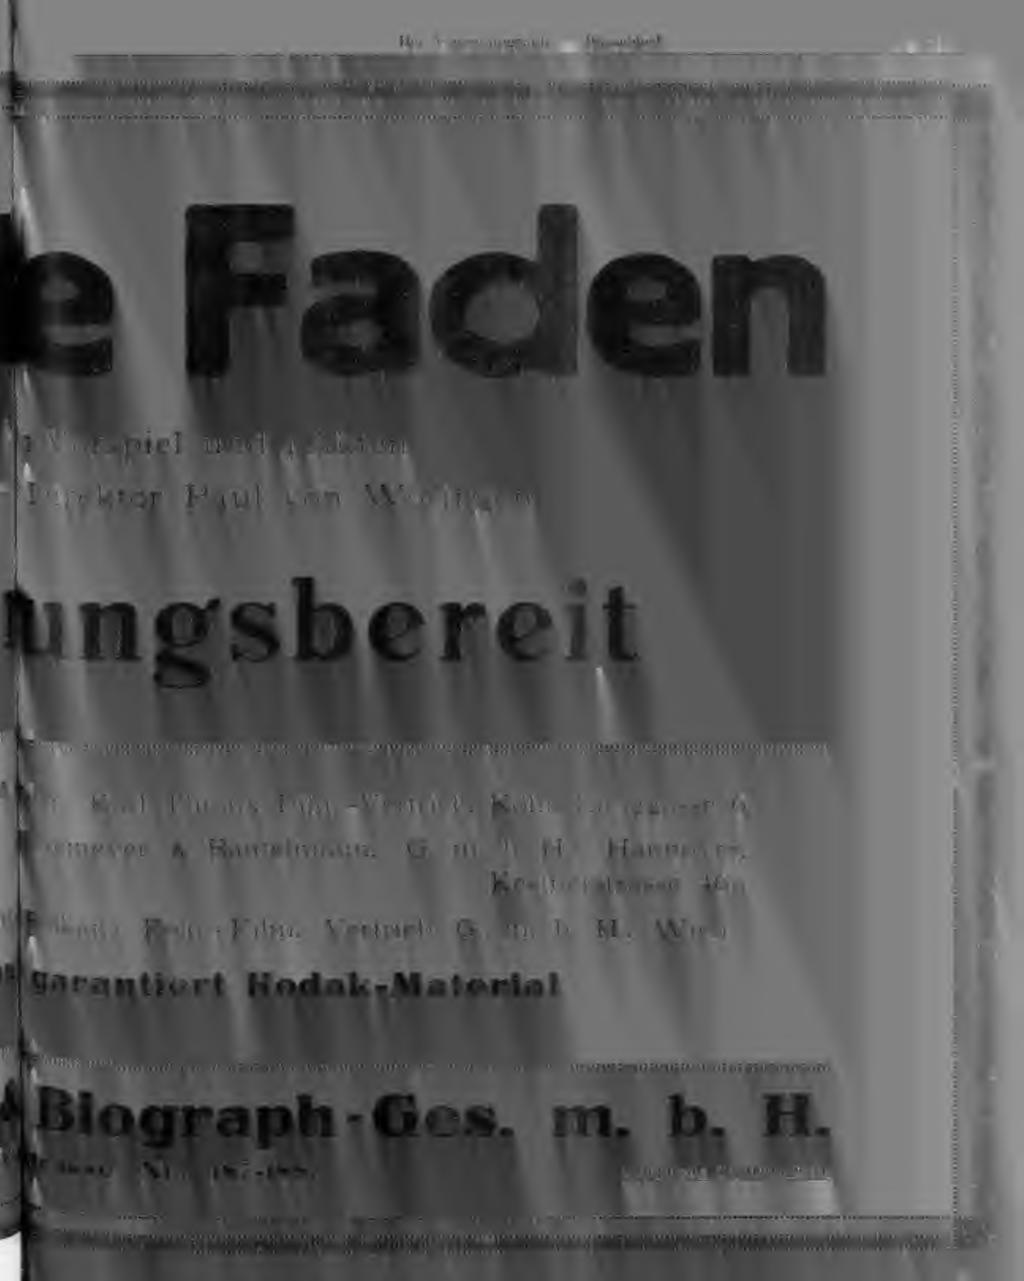 ngsbereit en: Karl Thioux Film-Vertrieb, Köln, Langgasse